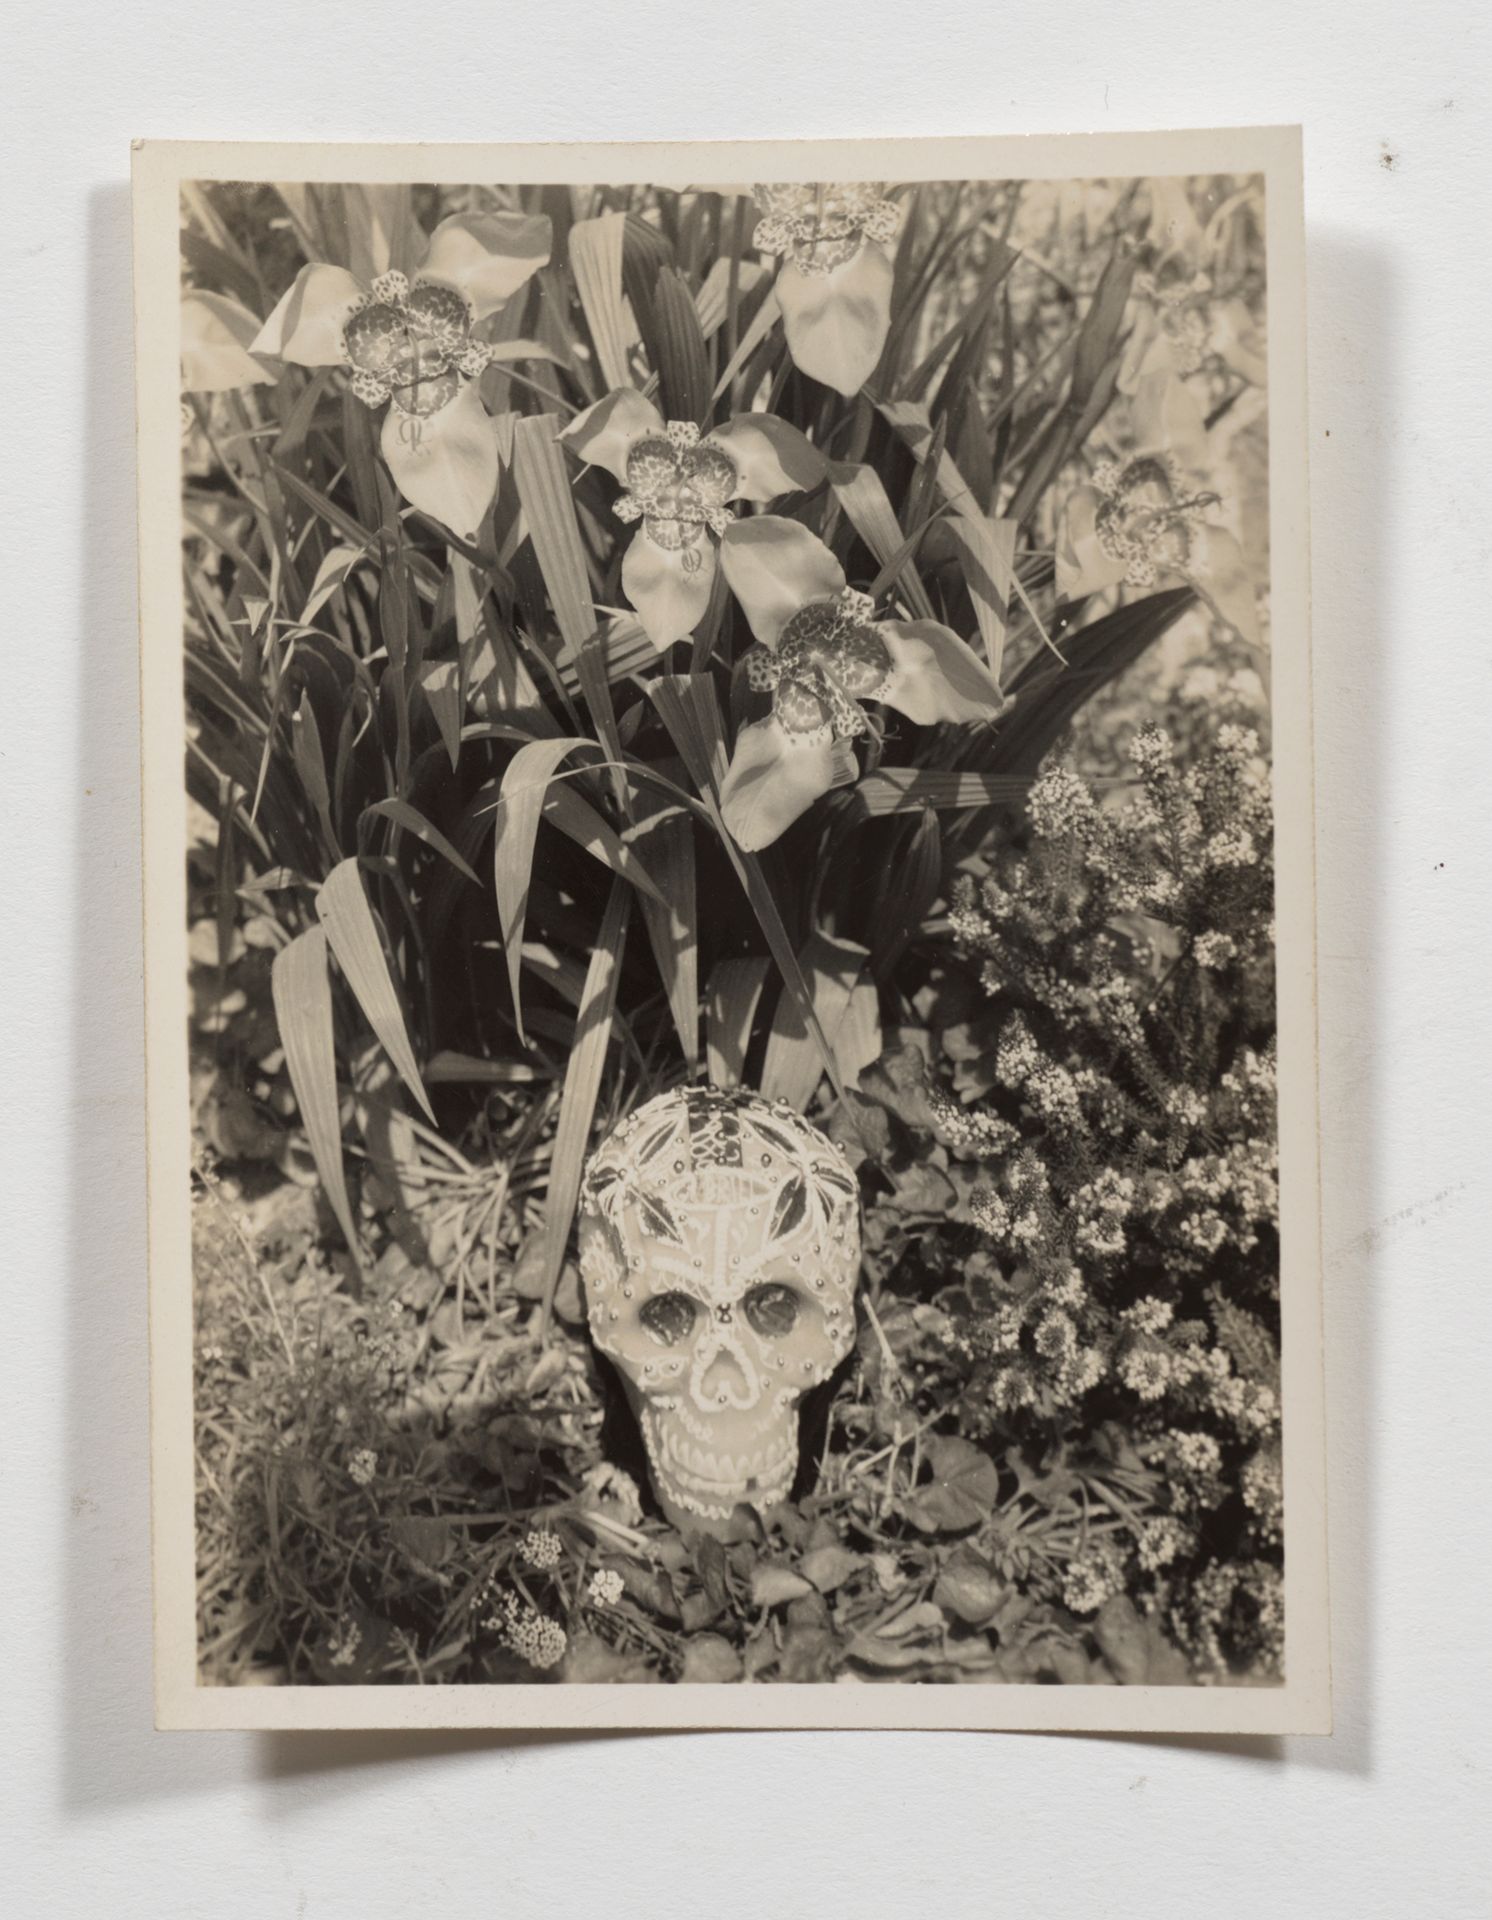 CAHUN Claude. Selbstporträt. Rote Hemerocallis. Jersey, 1939. 10,5 x 7,5 cm.
Zei&hellip;